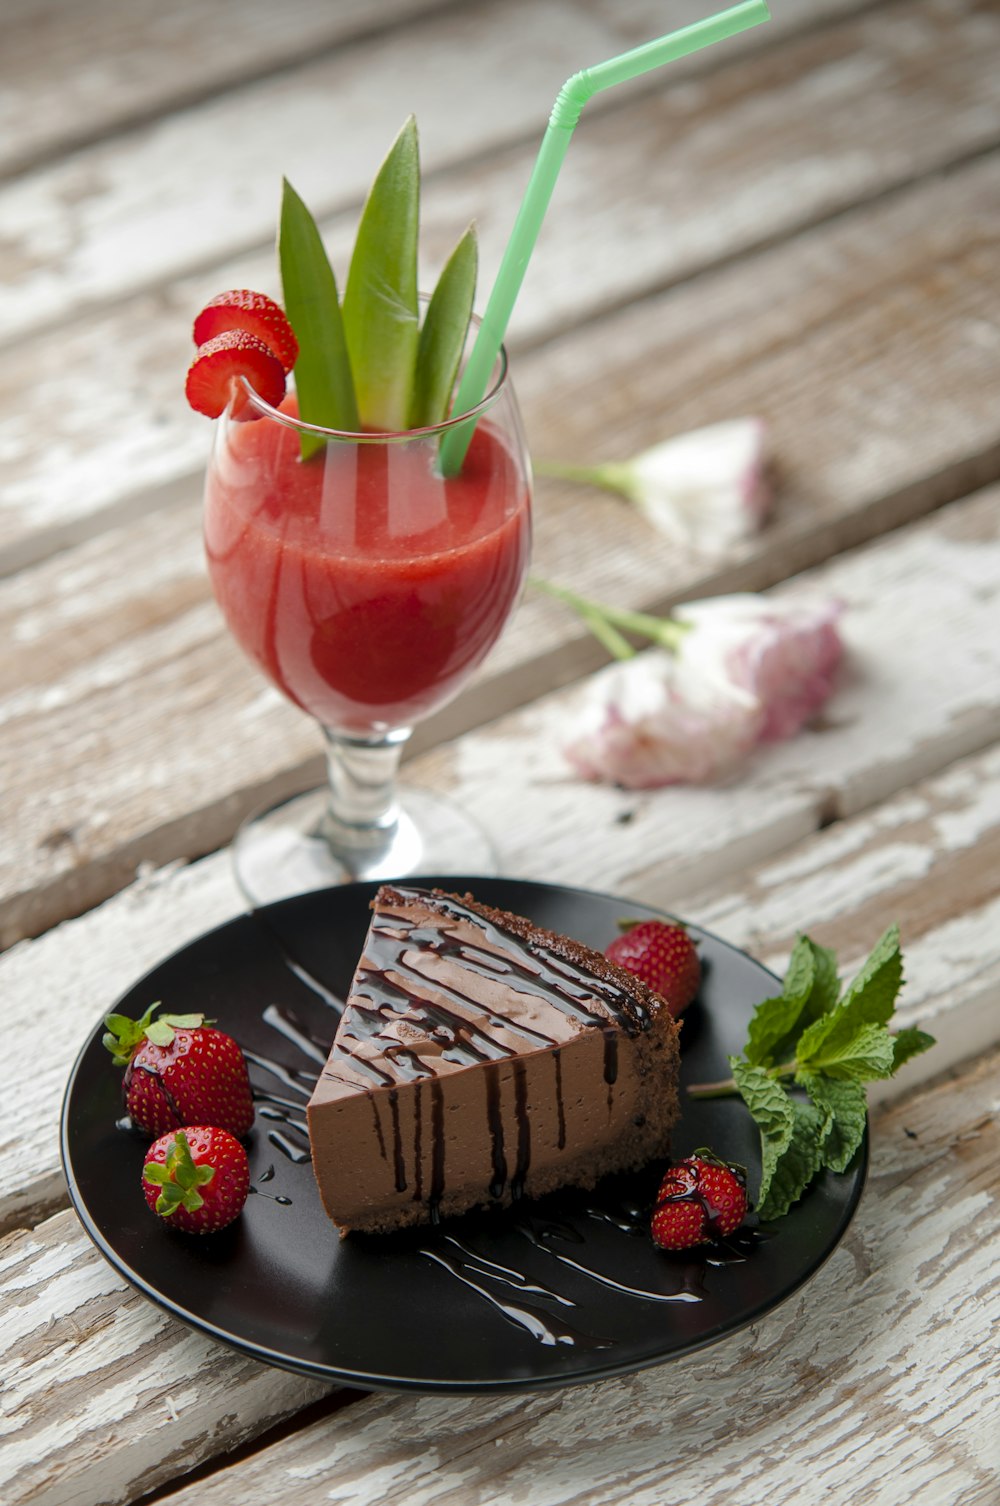 chocolate cake beside strawberries and wine glass